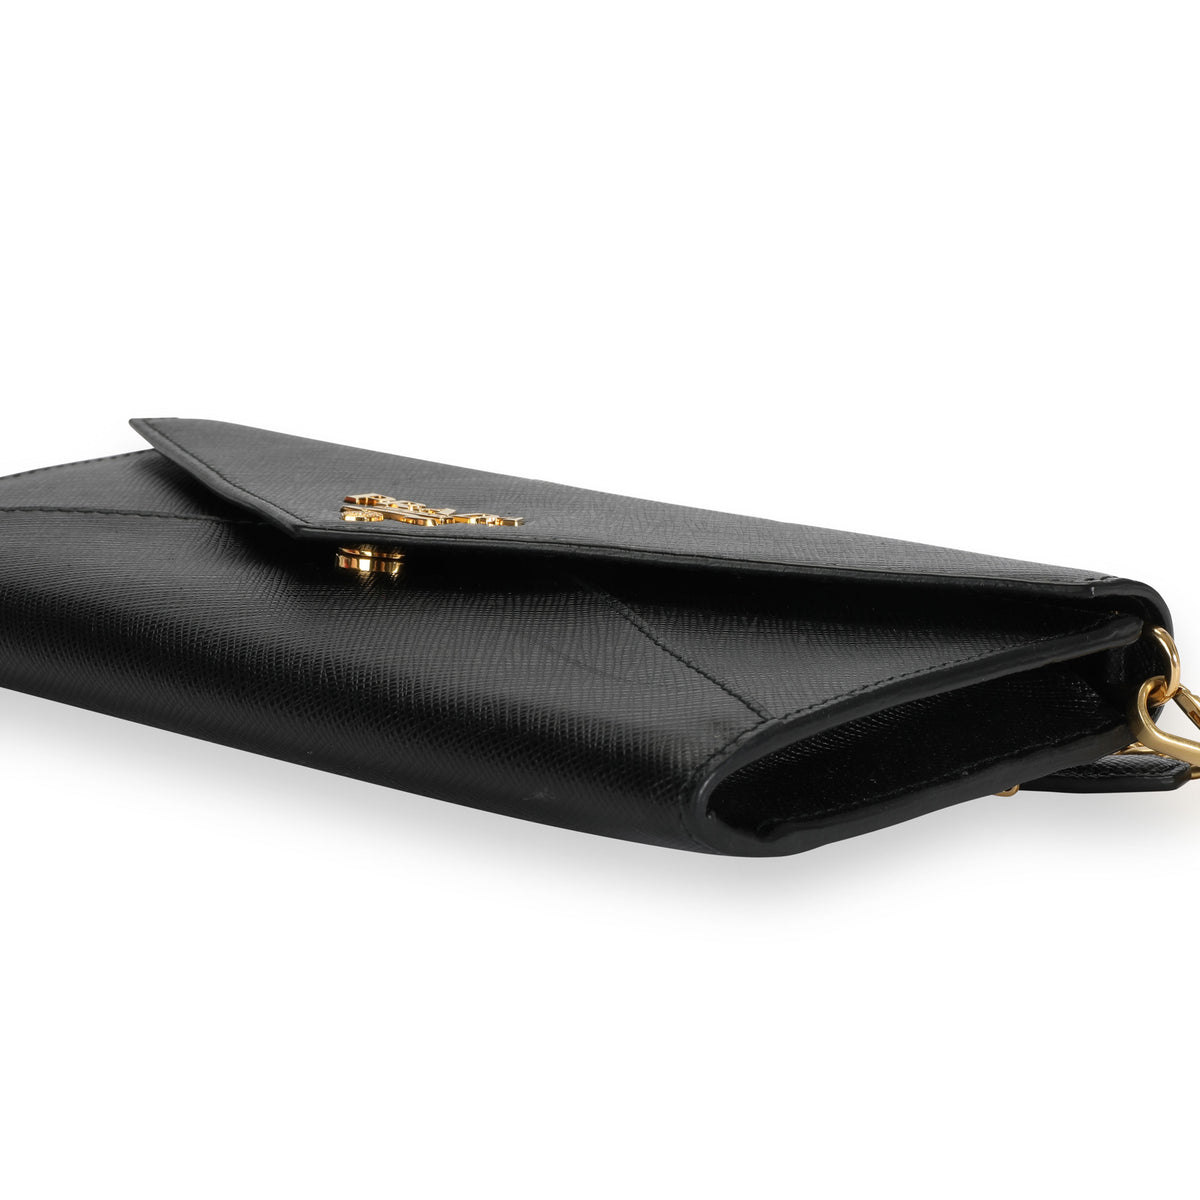 Prada Black Saffiano Chain Wallet Bag Prada